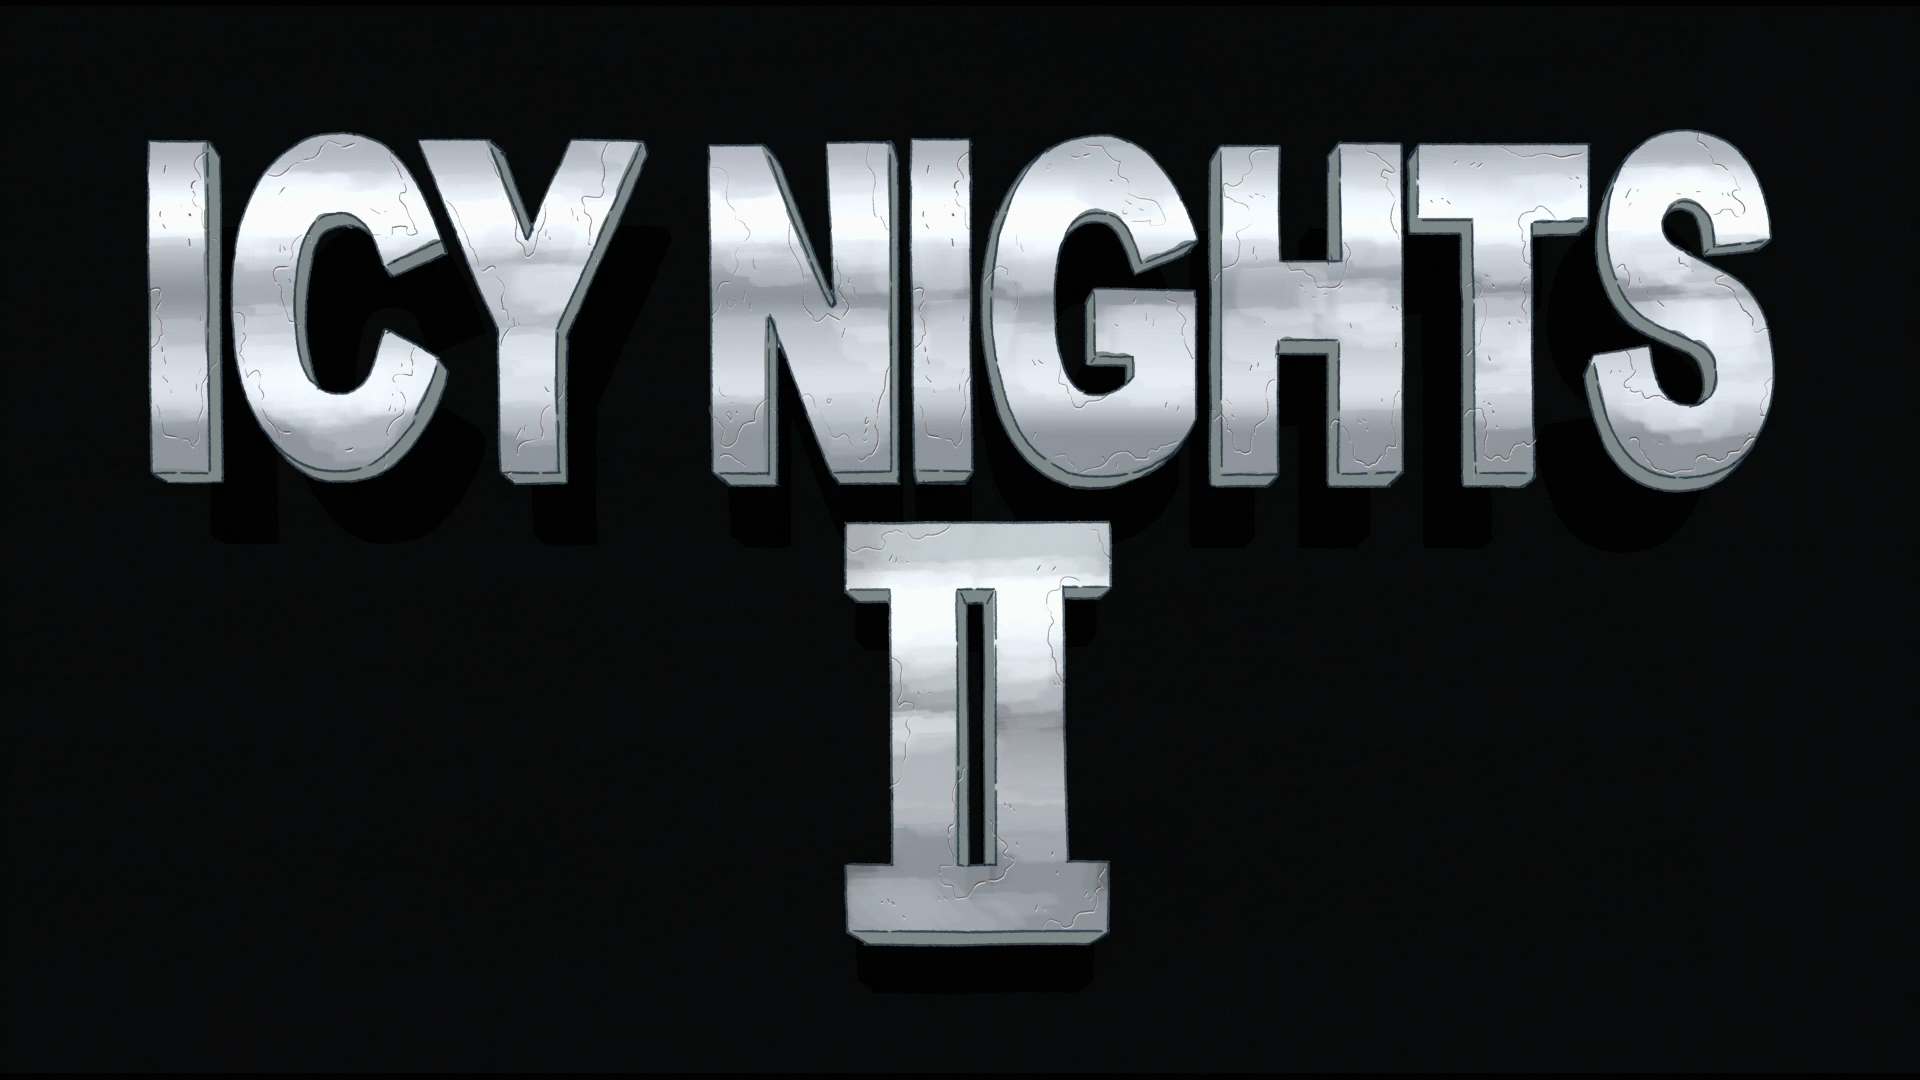 23 серия 3 сезона Icy Nights II